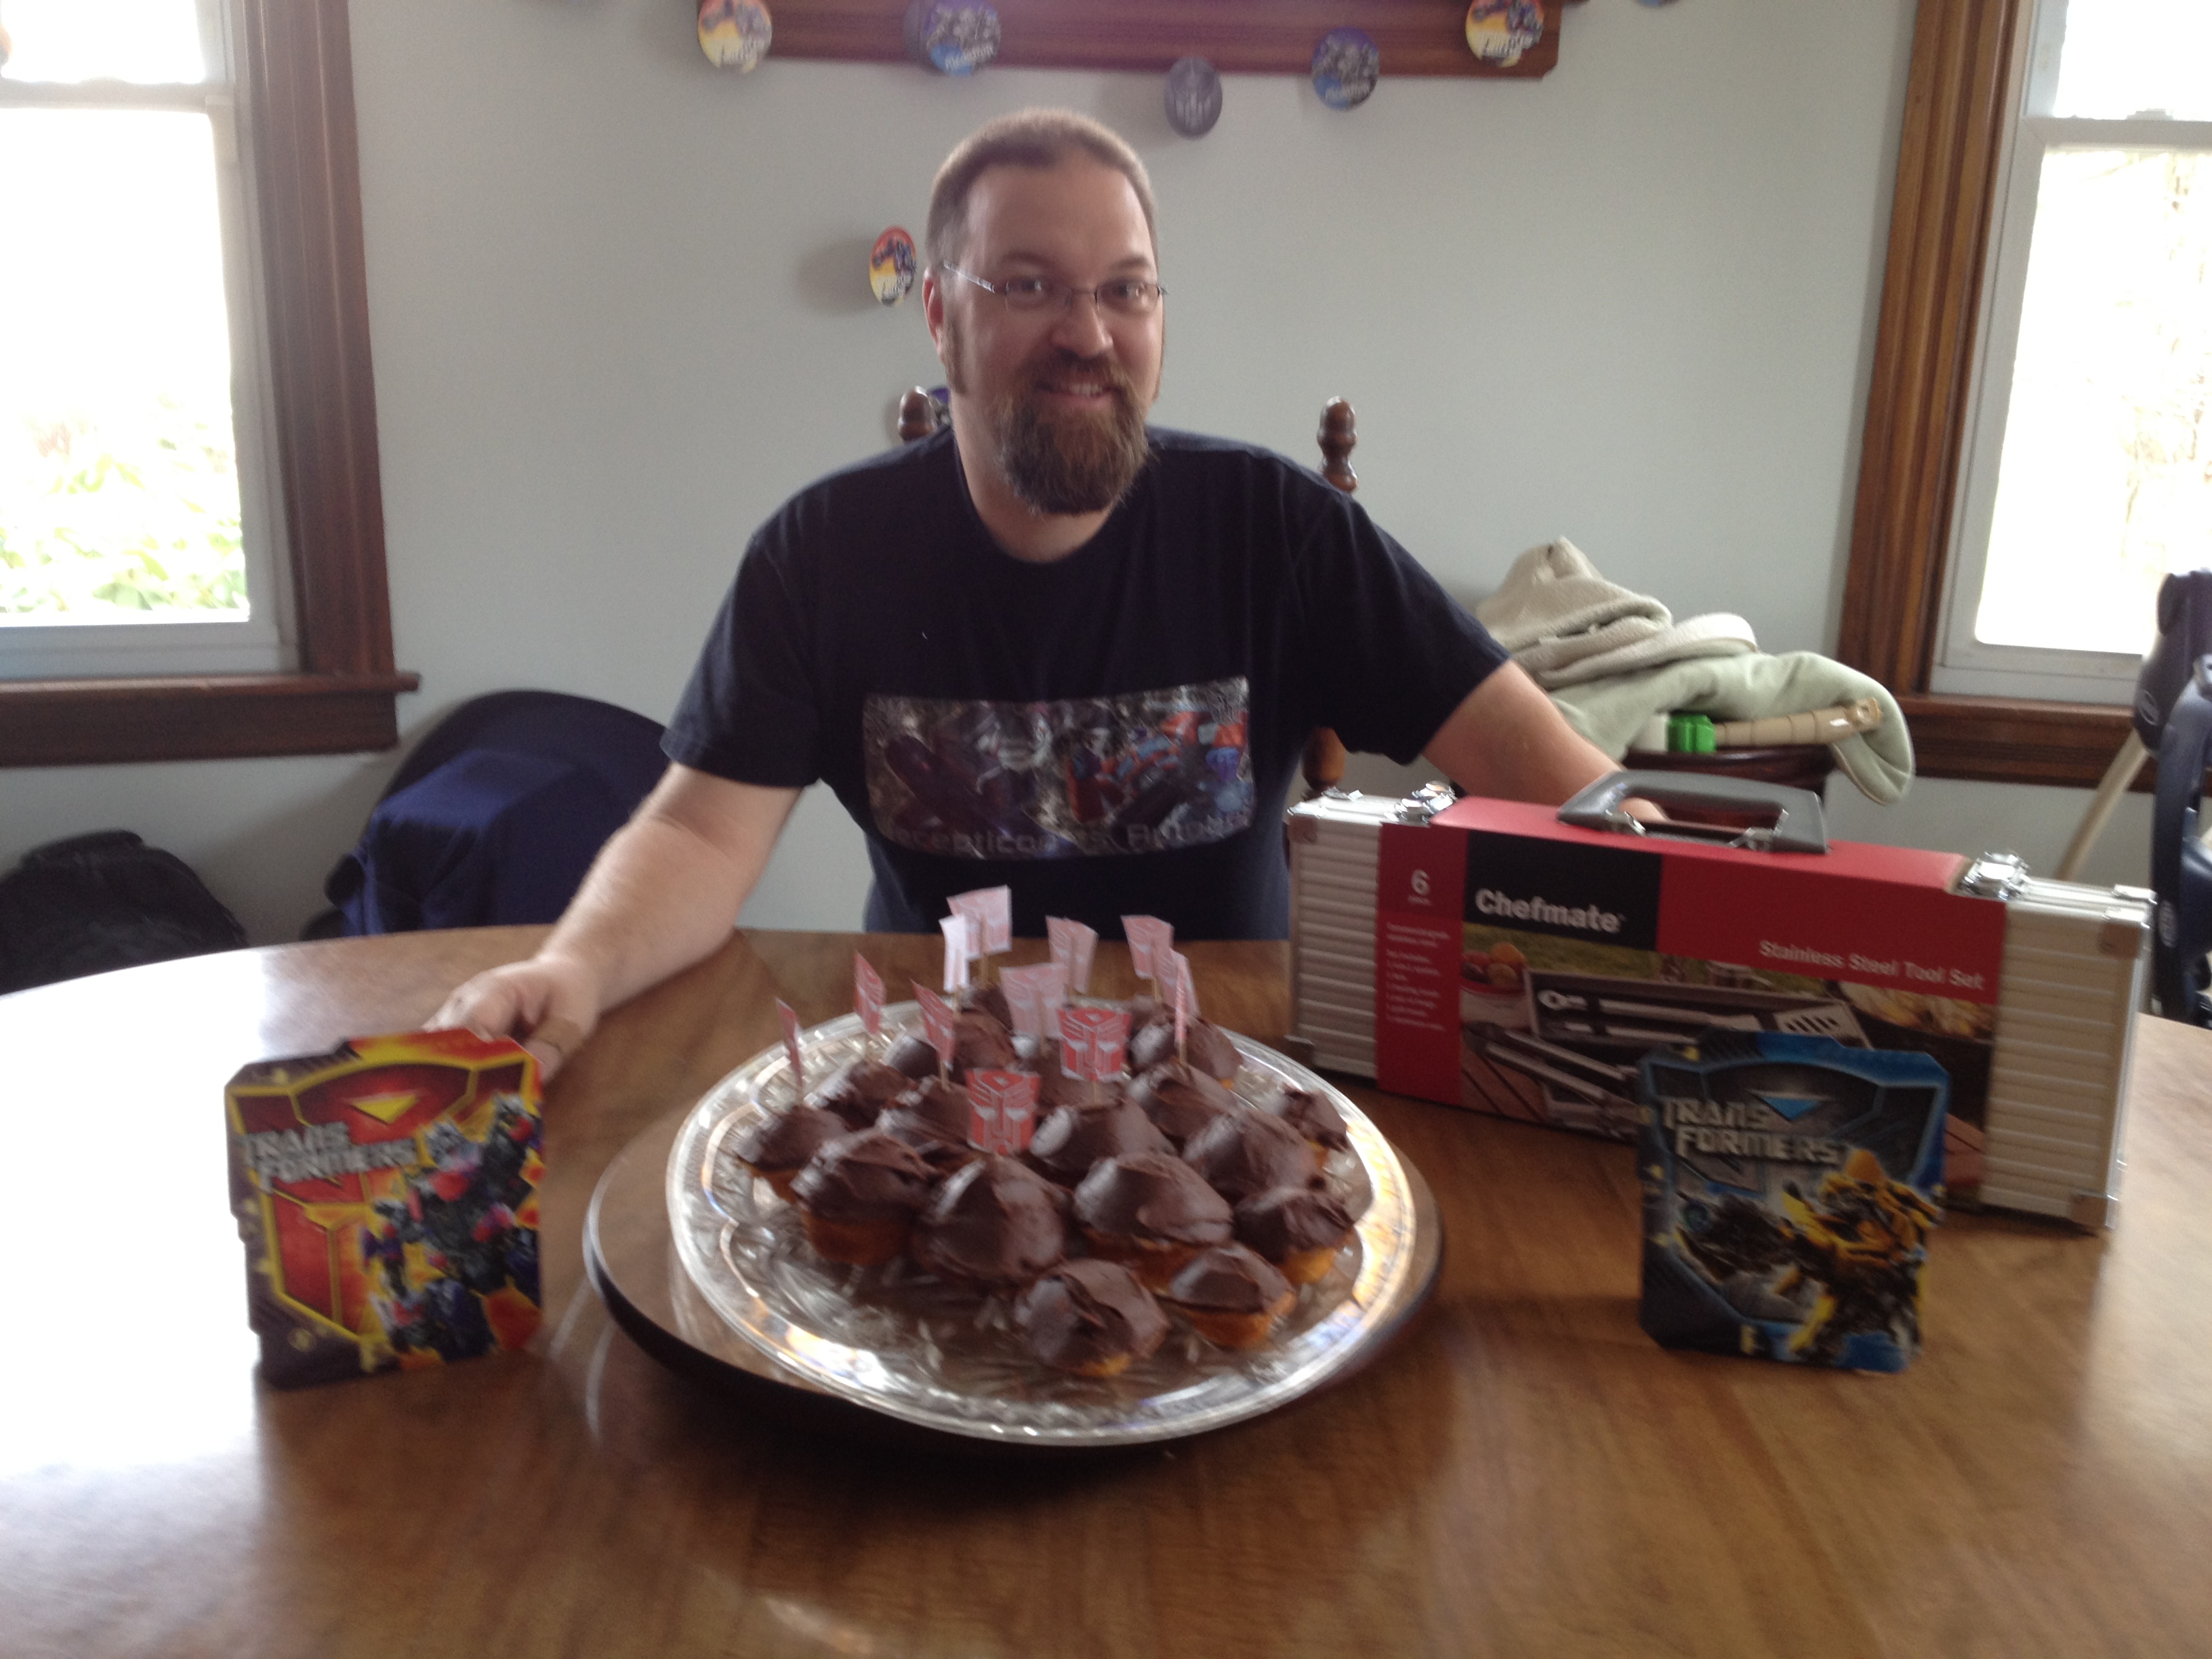 My Transformers Birthday Party. I'm 38